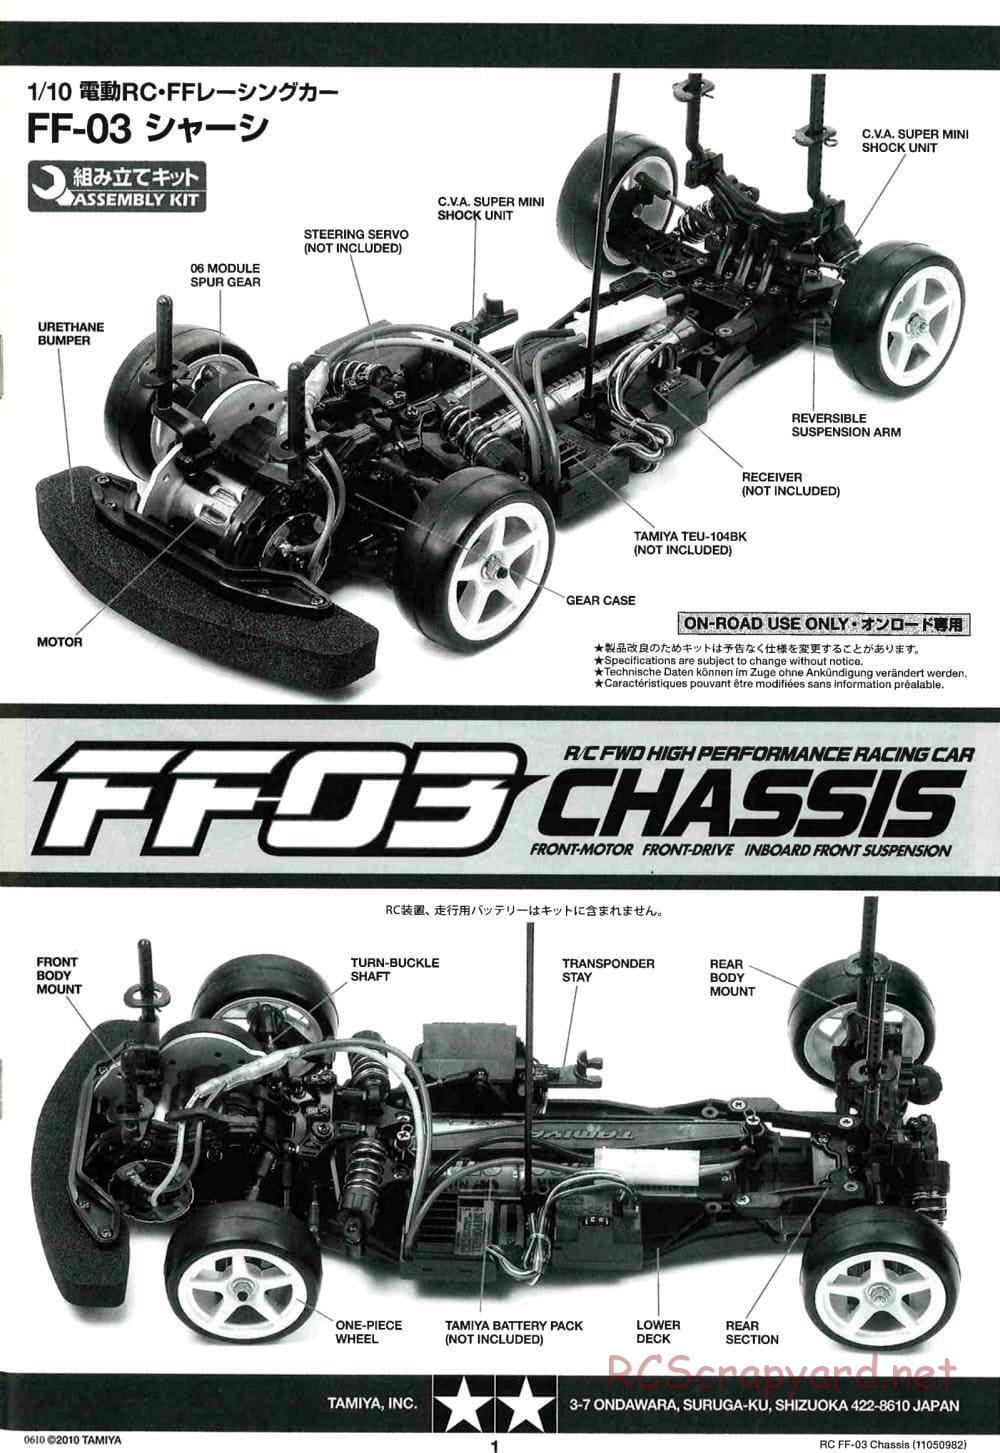 Tamiya - FF-03 Chassis - Manual - Page 1